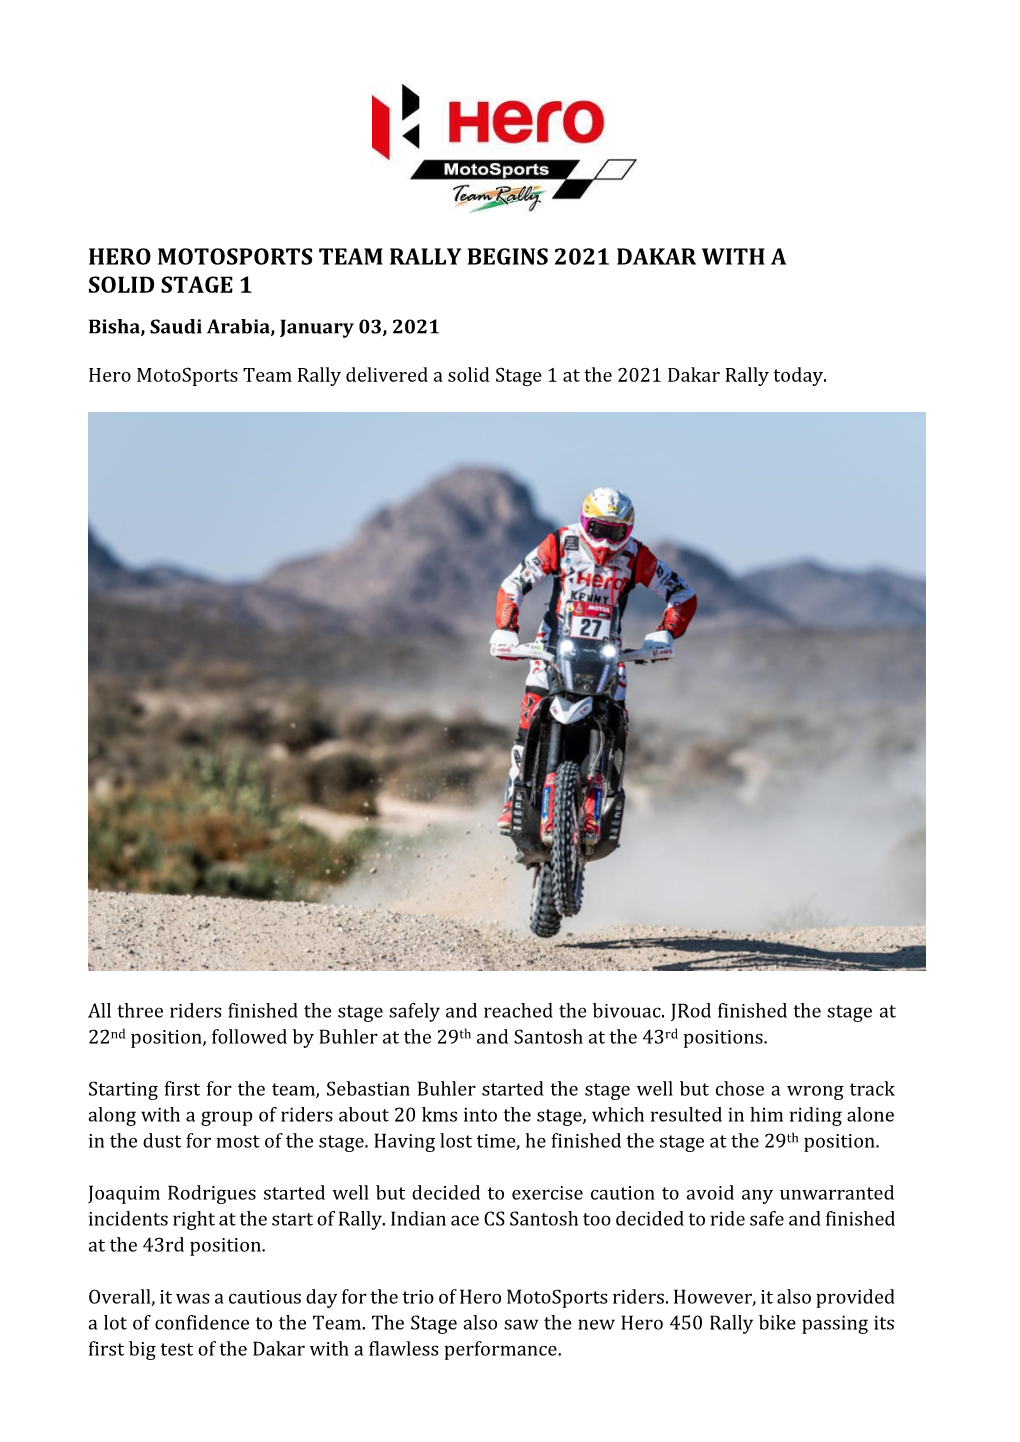 HERO MOTOSPORTS TEAM RALLY BEGINS 2021 DAKAR with a SOLID STAGE 1 Bisha, Saudi Arabia, January 03, 2021